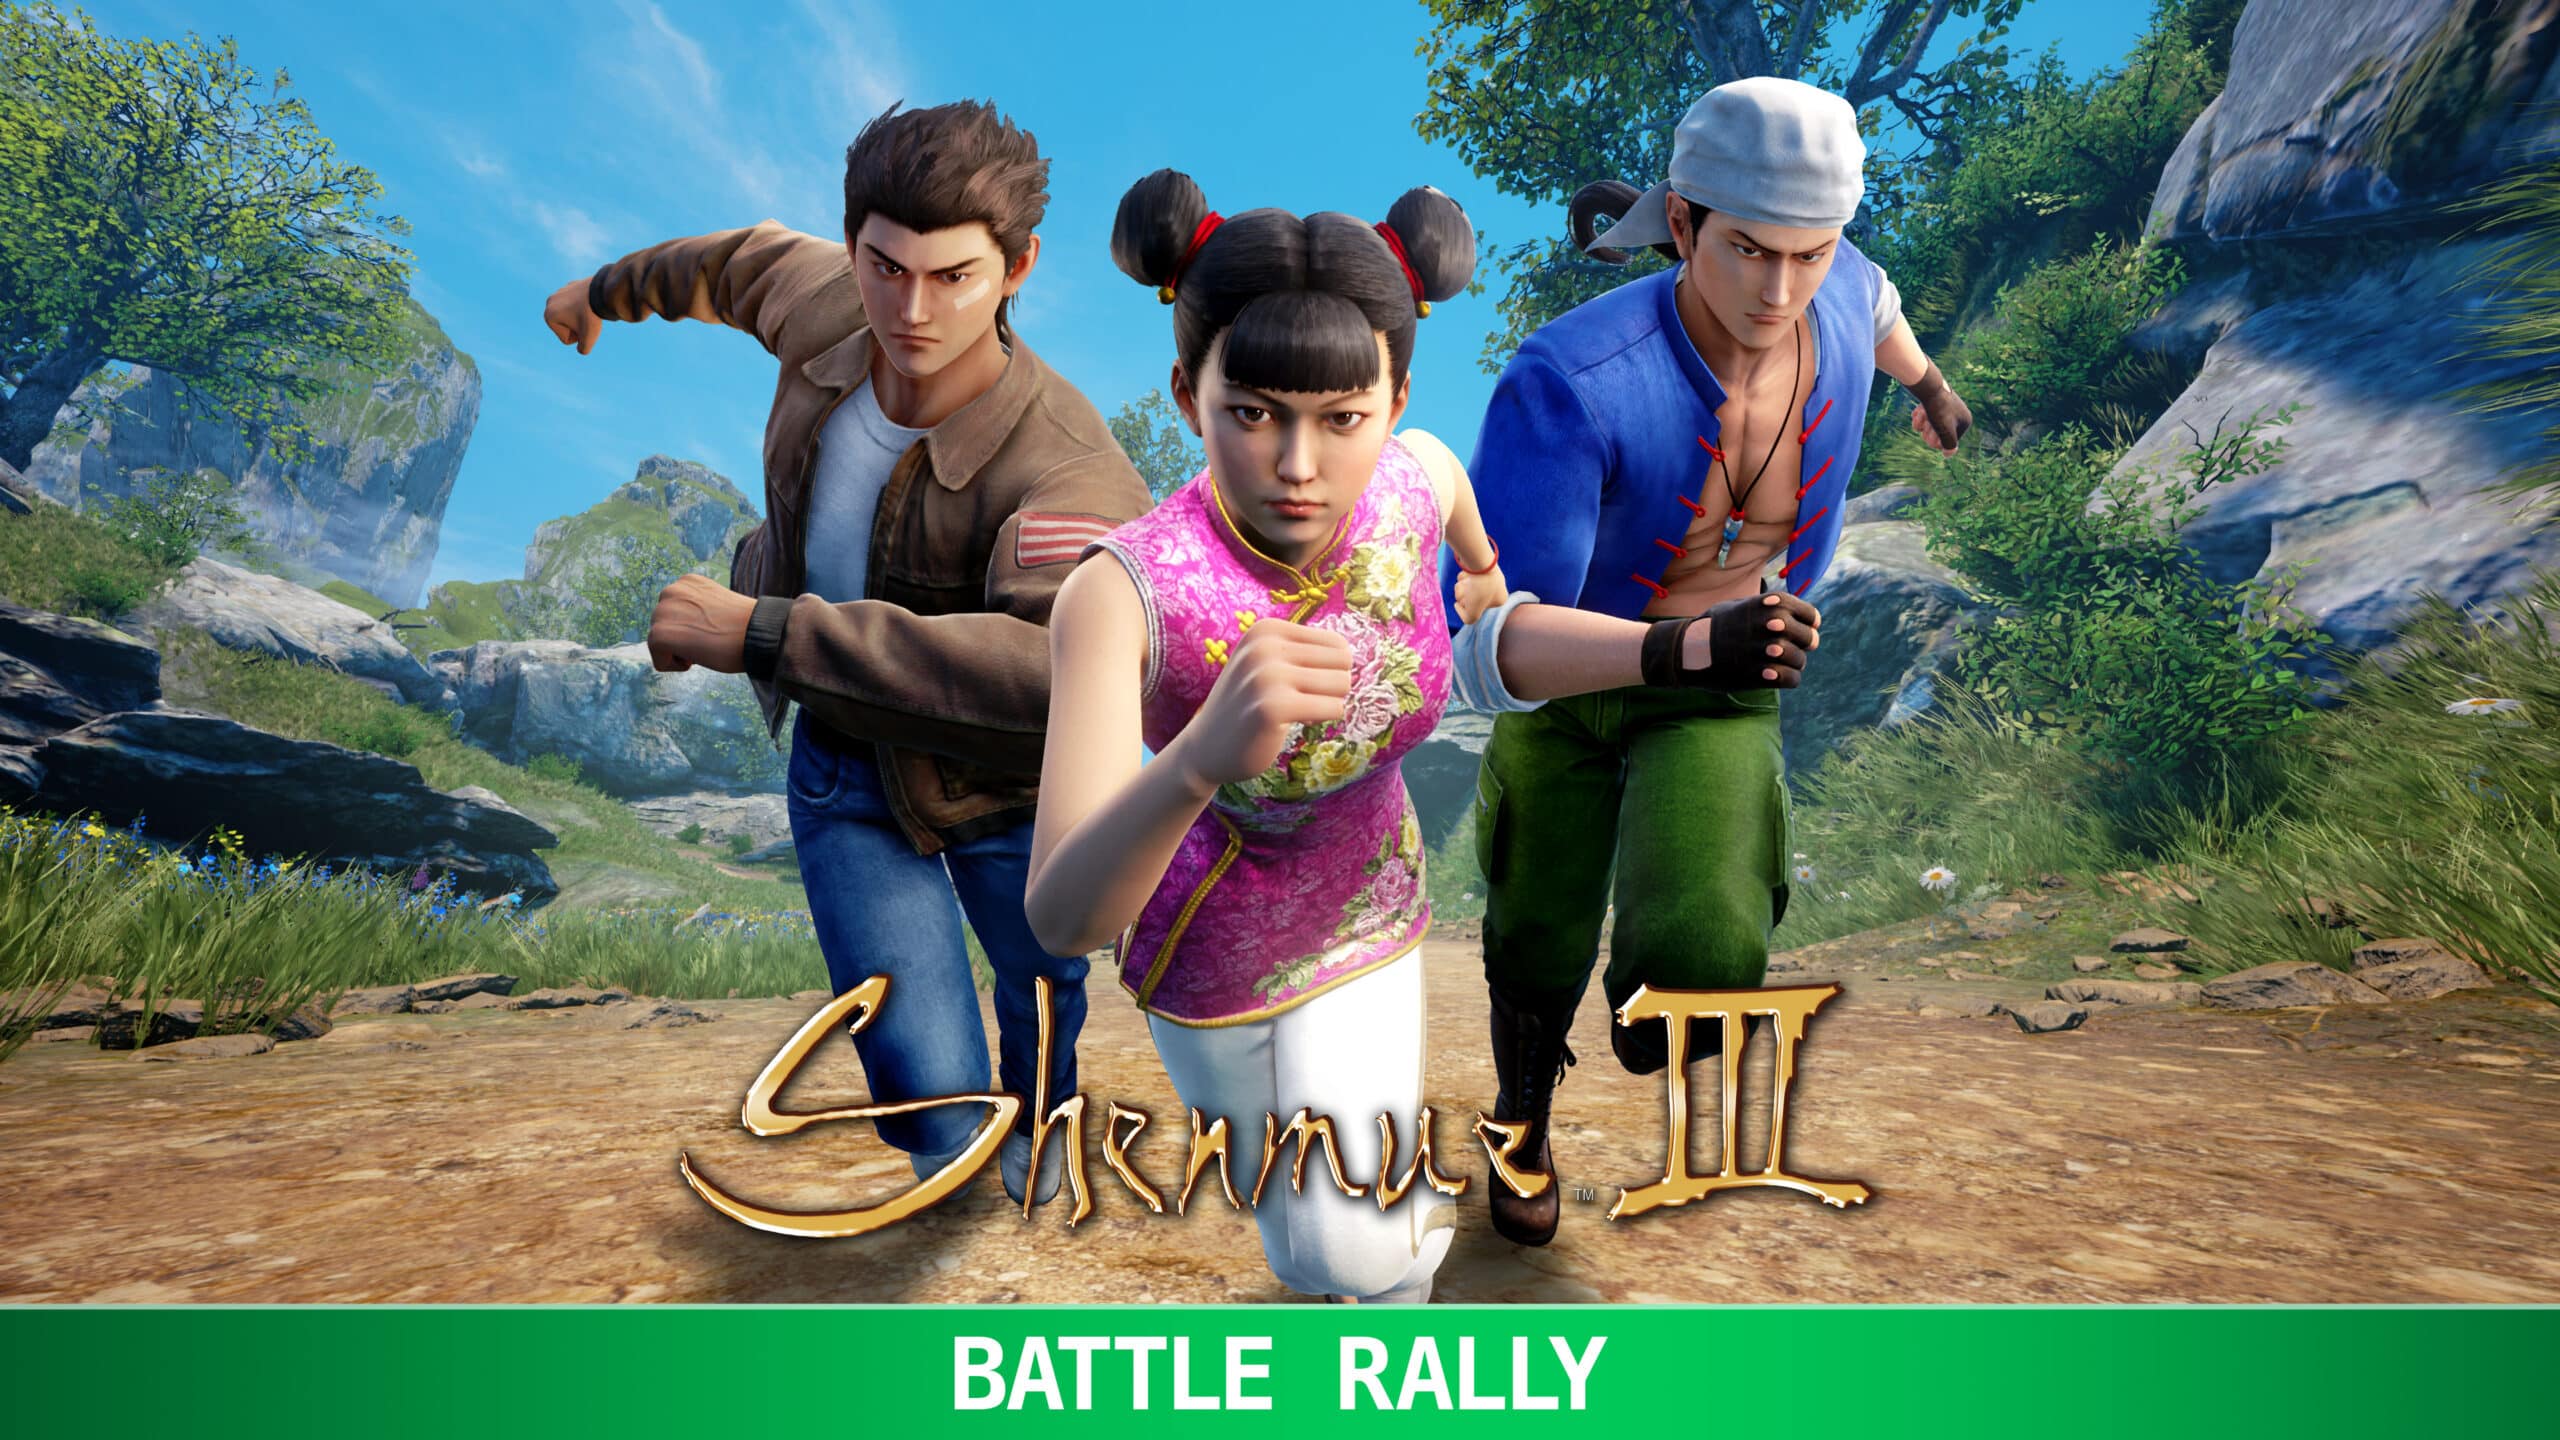 Shenmue III Battle Rally DLC Promo Image